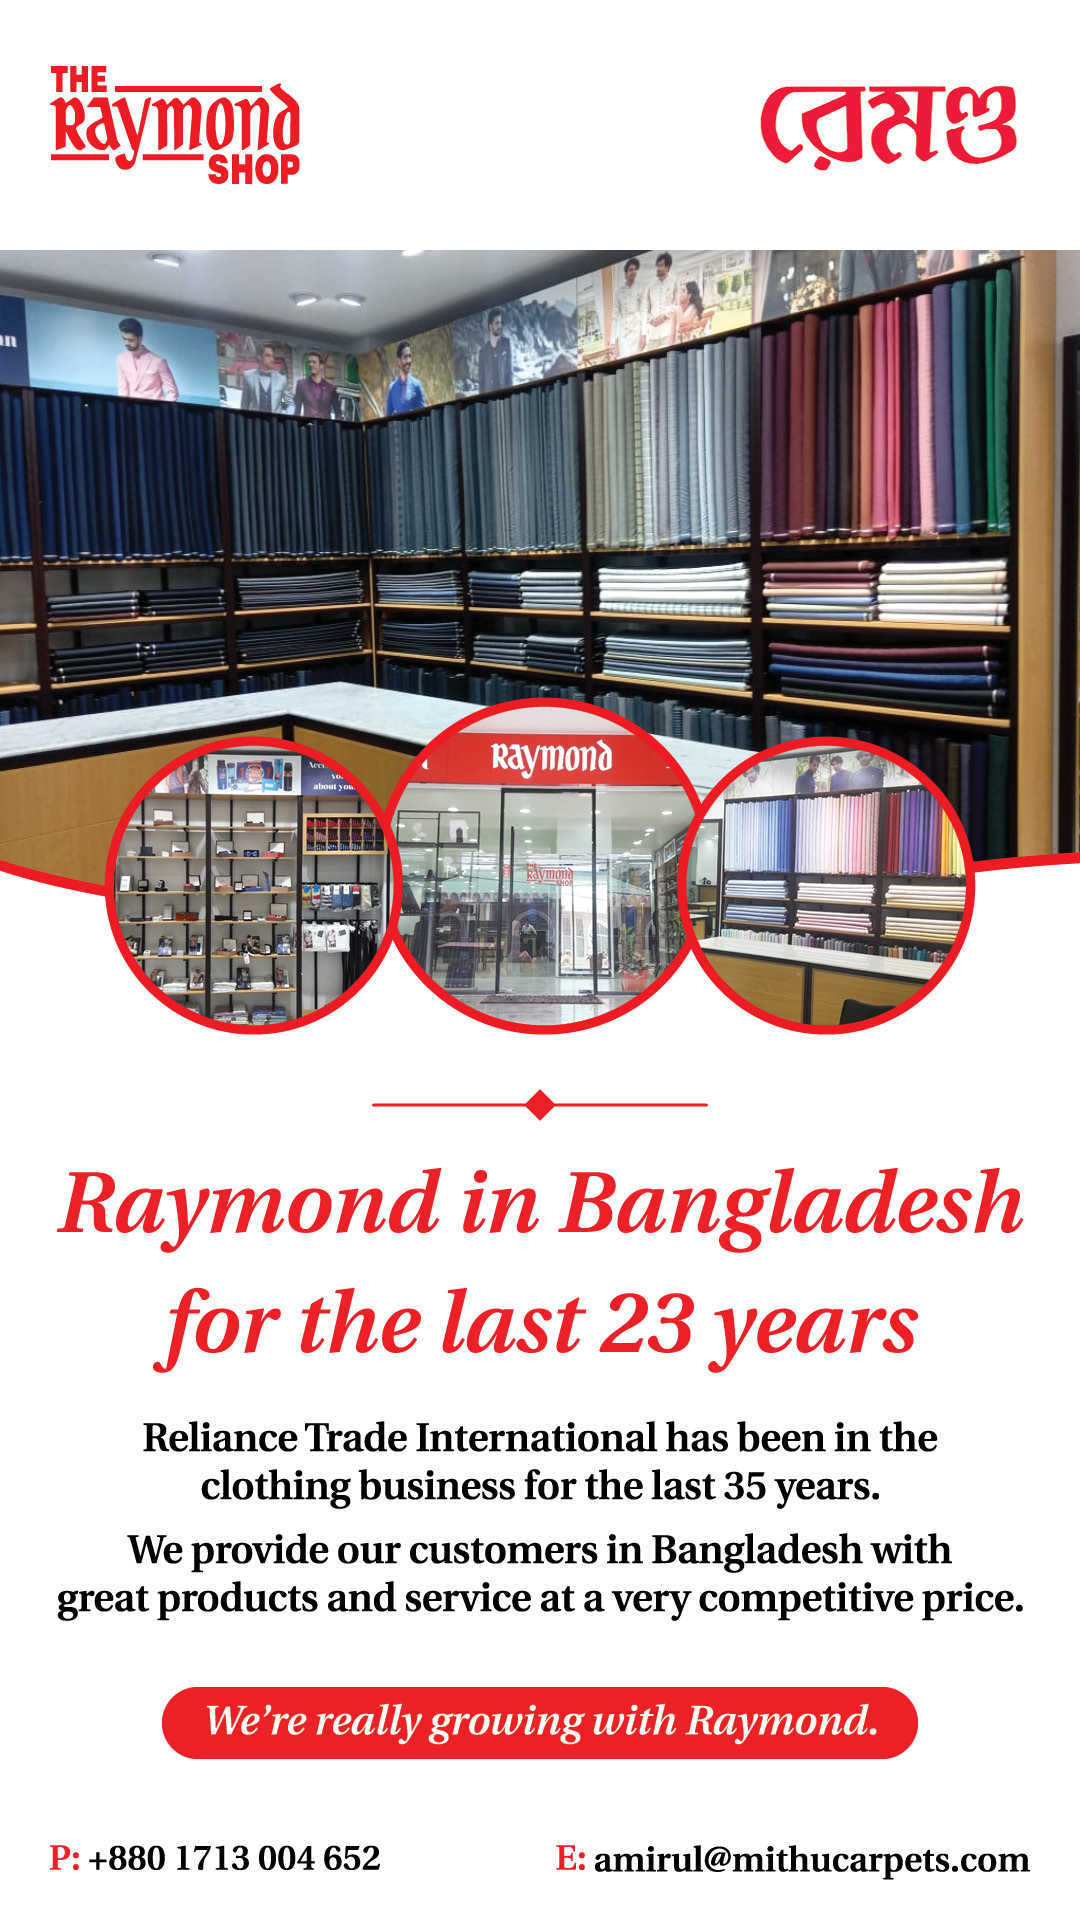 Reliance Trade International